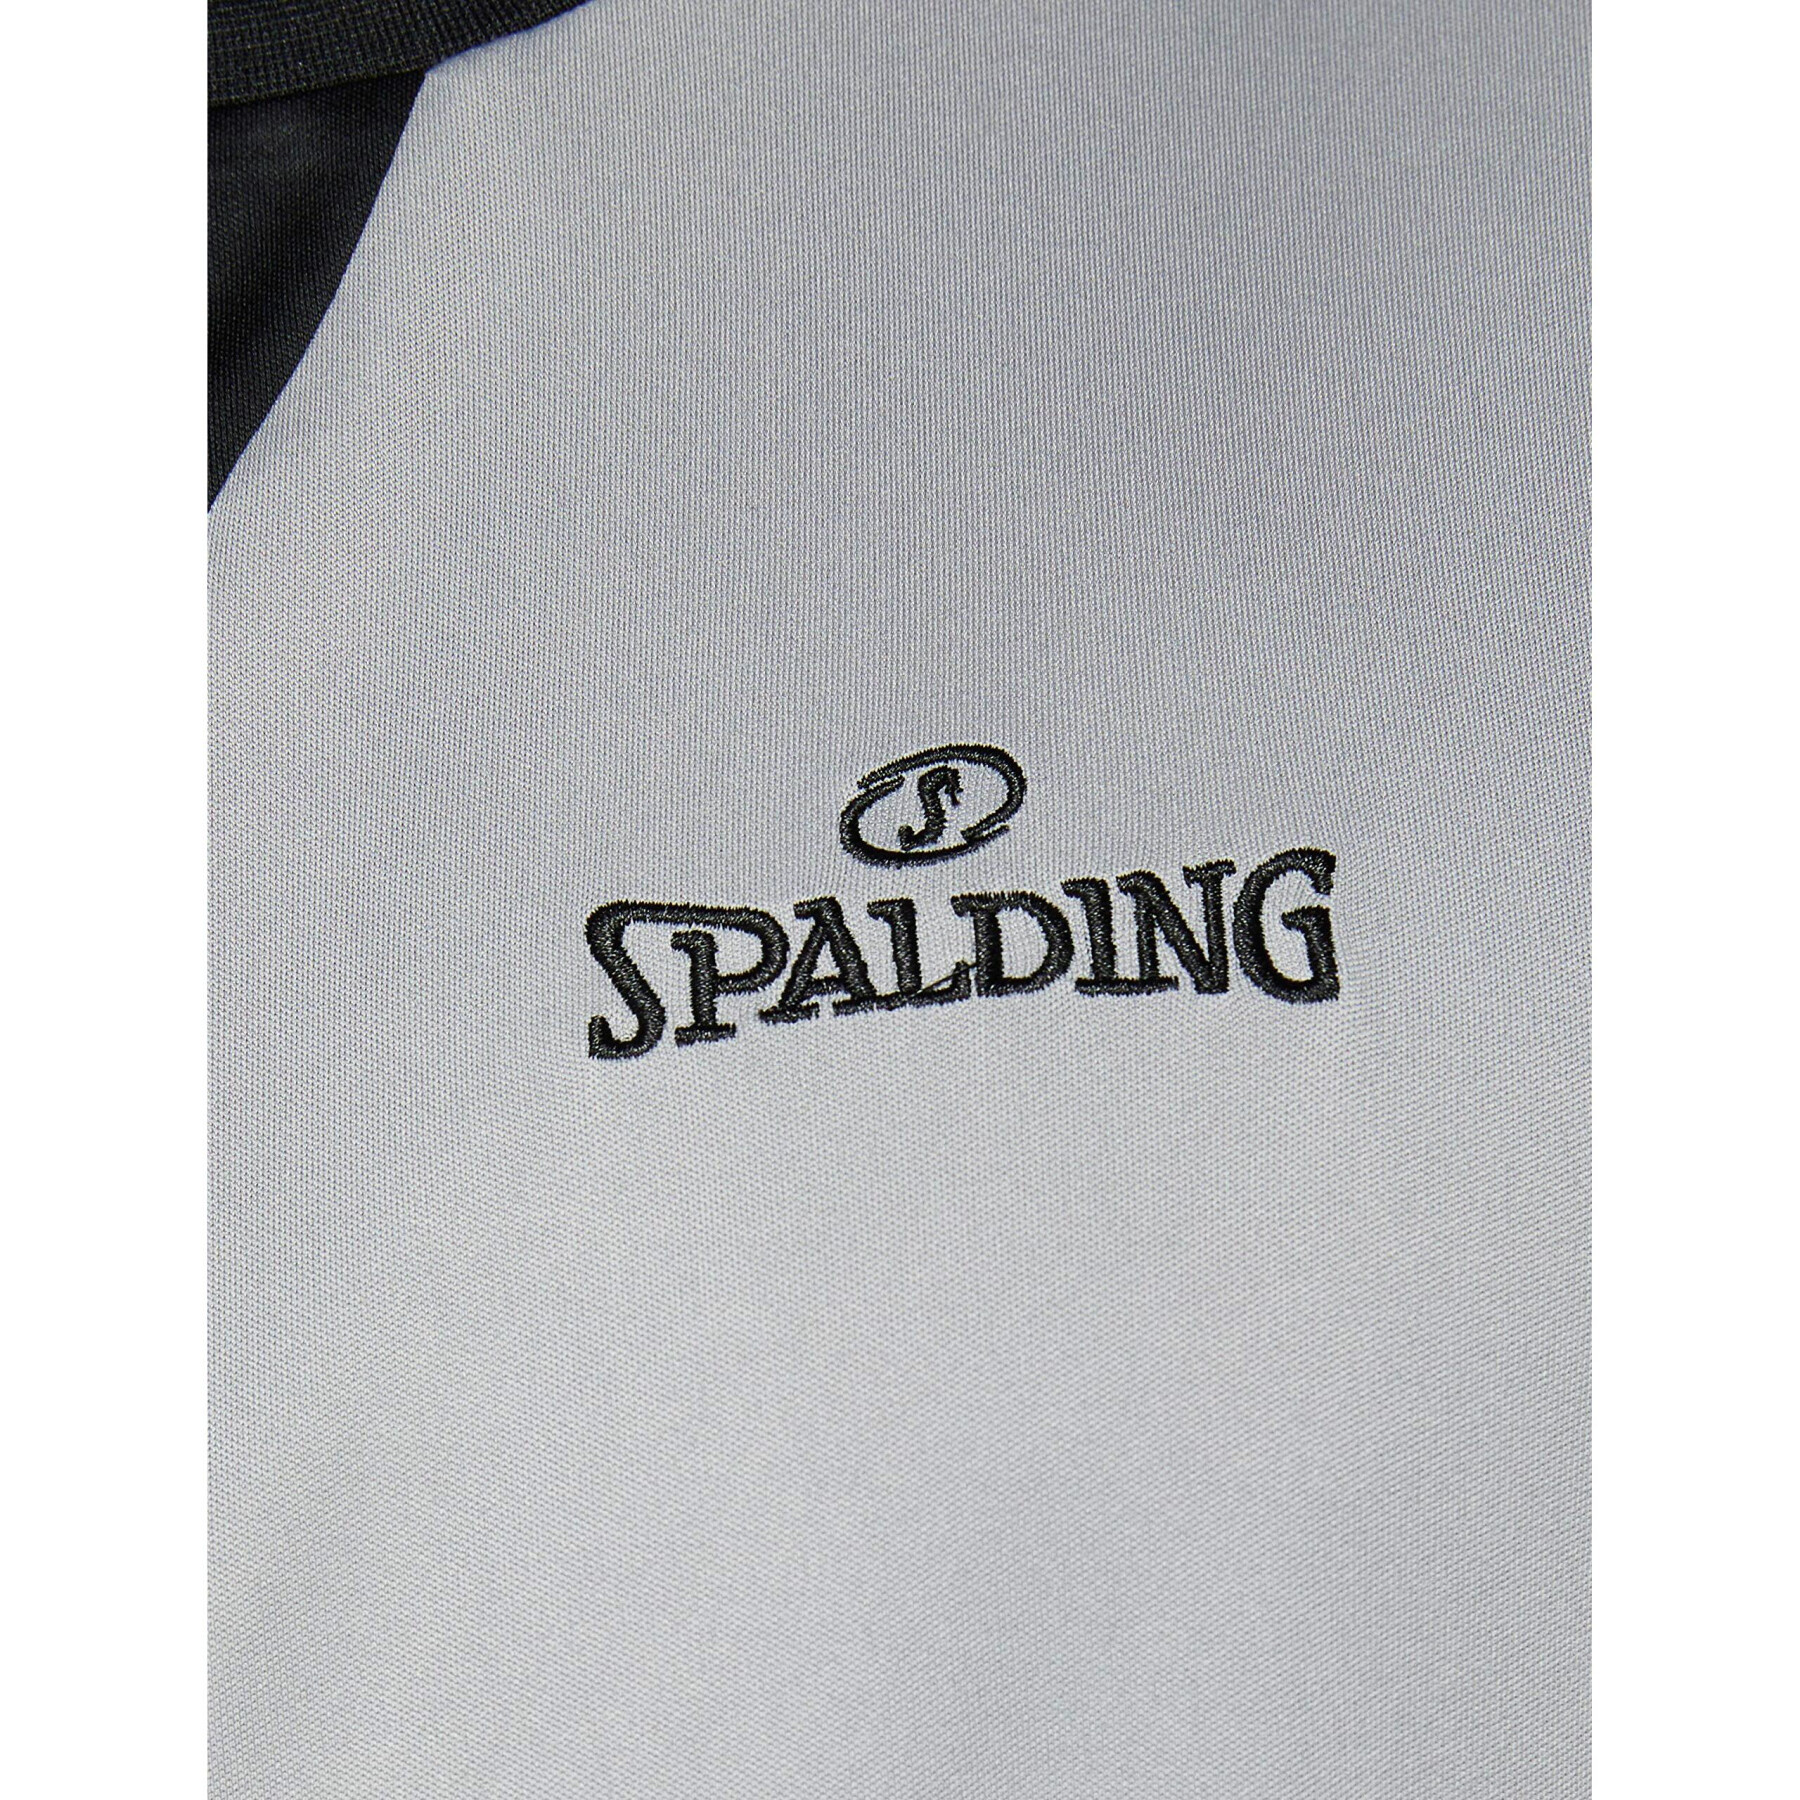 Koszulka sędziowska Spalding Classic